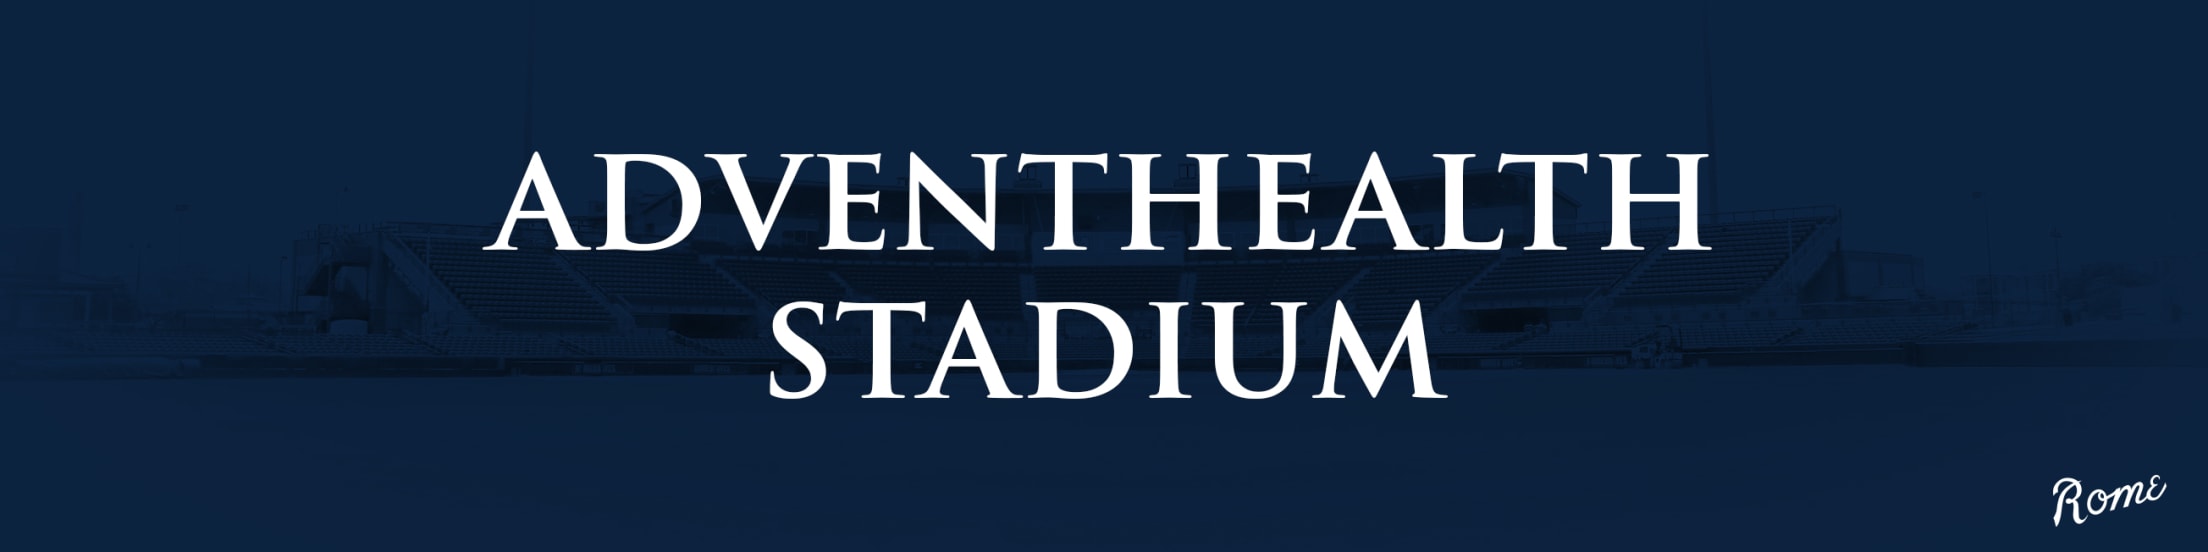 AdventHealth Stadium Braves